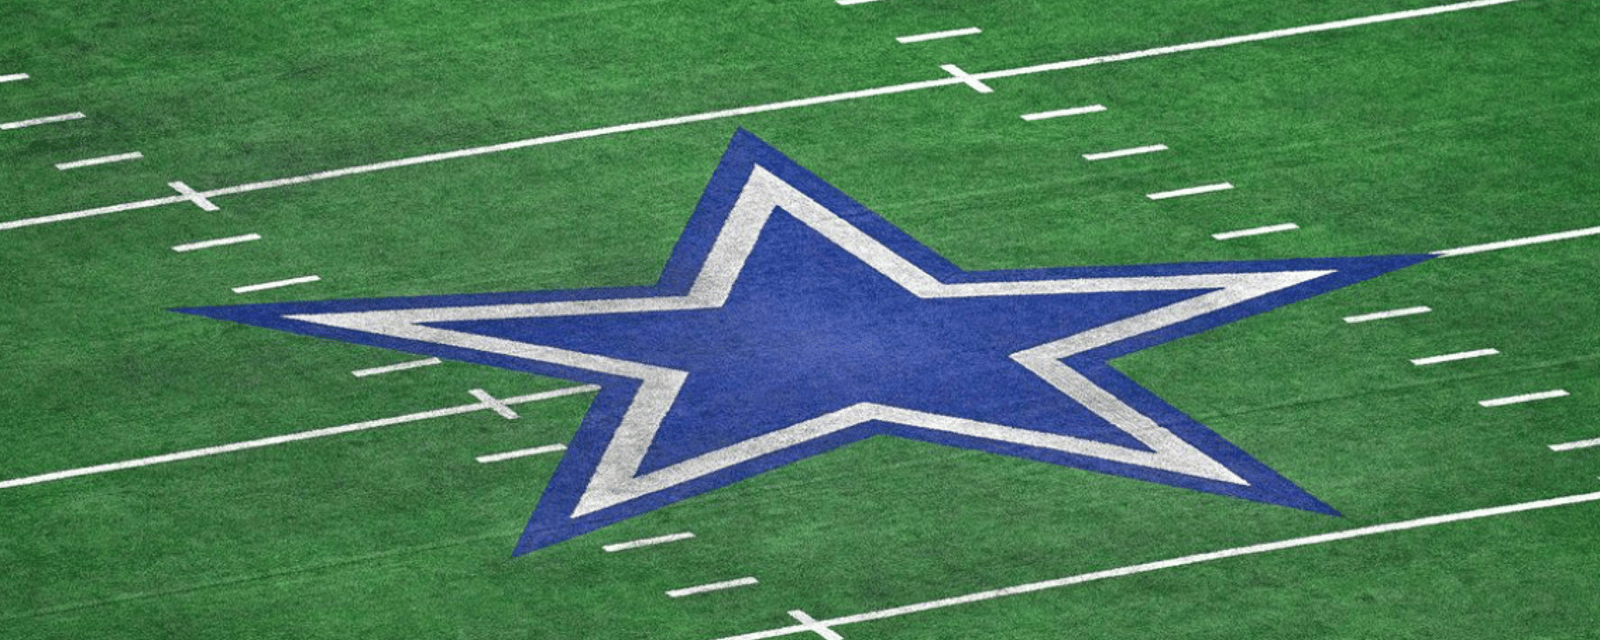 Bad injury news for the Dallas Cowboys 